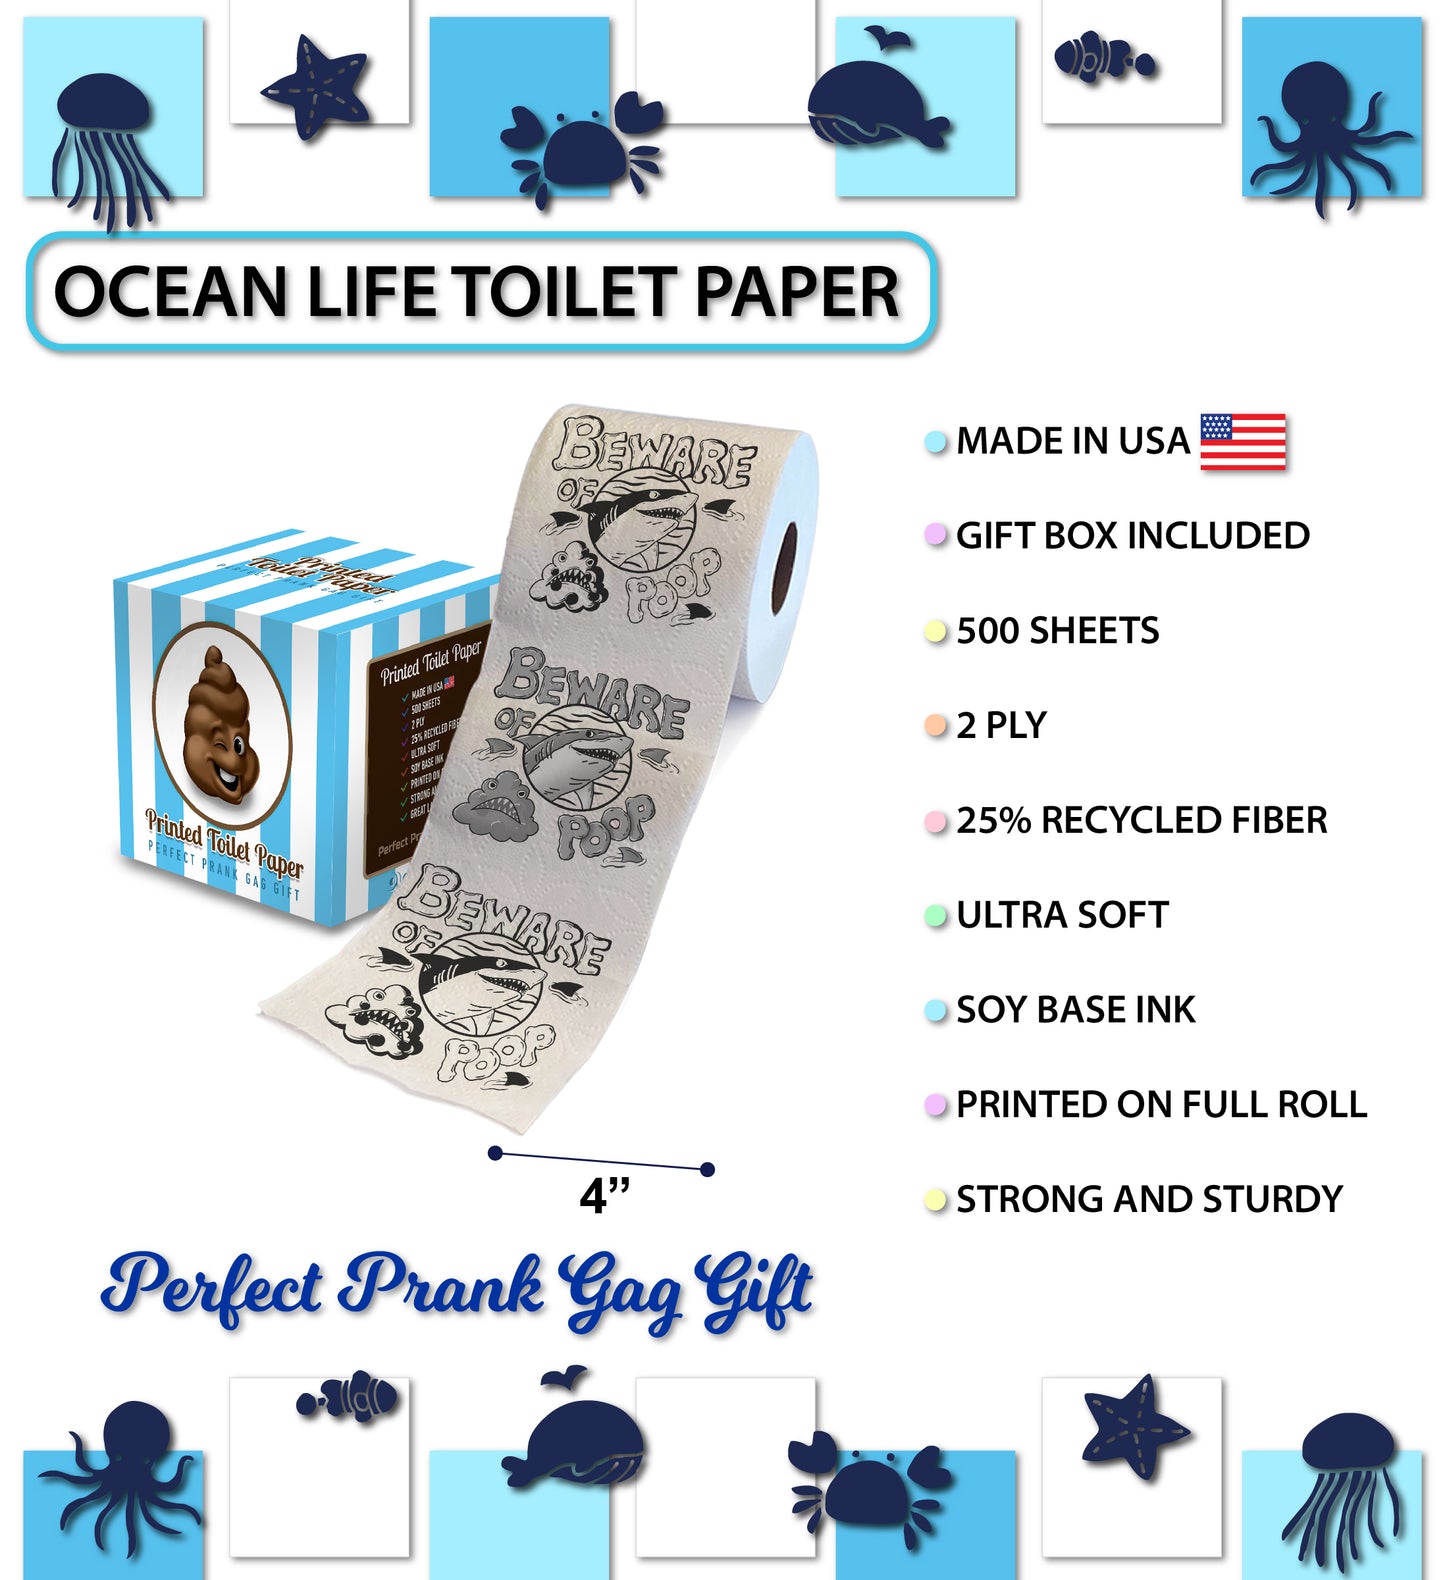 Printed TP Beware of Shark Poop Printed Toilet Paper Funny Gag Gift – 500 Sheet